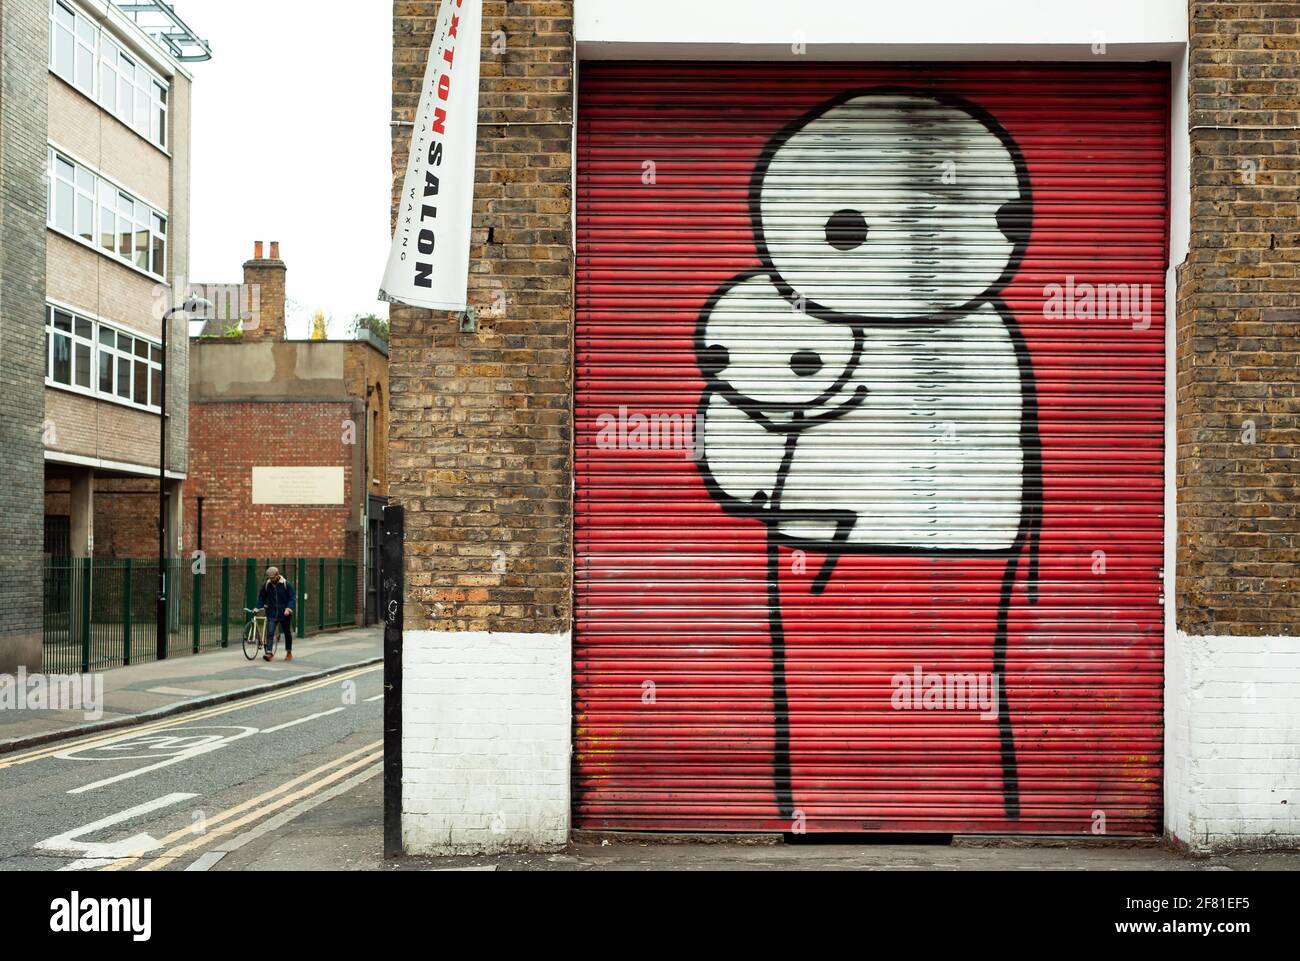 Stik's work (British graffiti artist based in London). Large stick figures on painted shutters. East London, UK. Apr 2013 Stock Photo